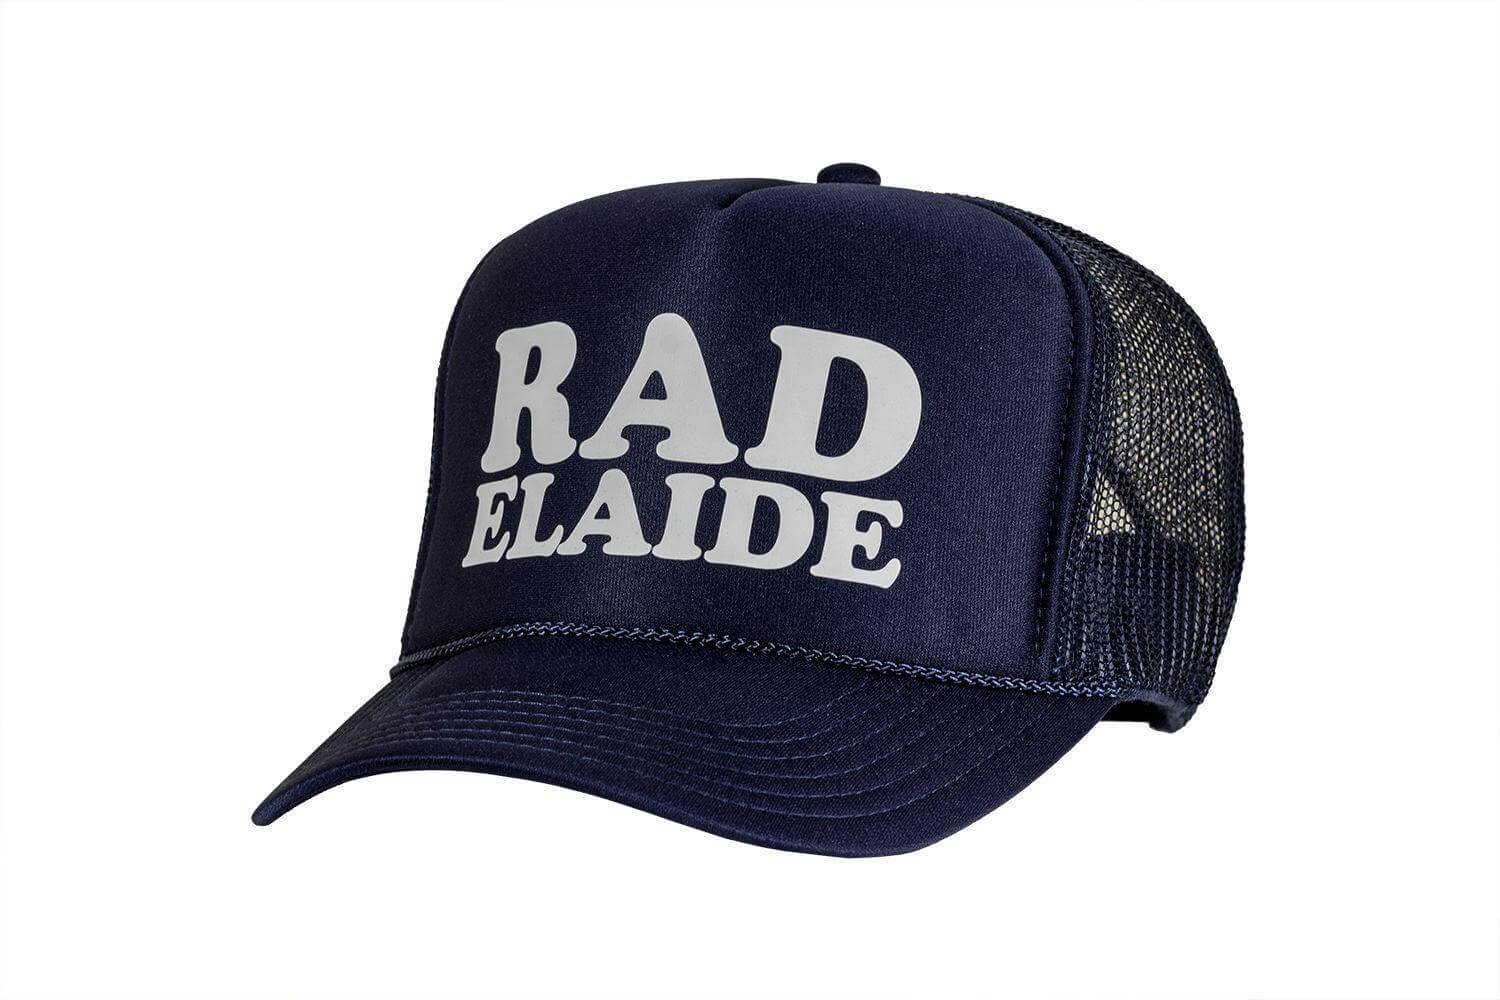 Adelaide high crown trucker cap with mesh back and snapback Radelaide - Tropic Trucker Australia®